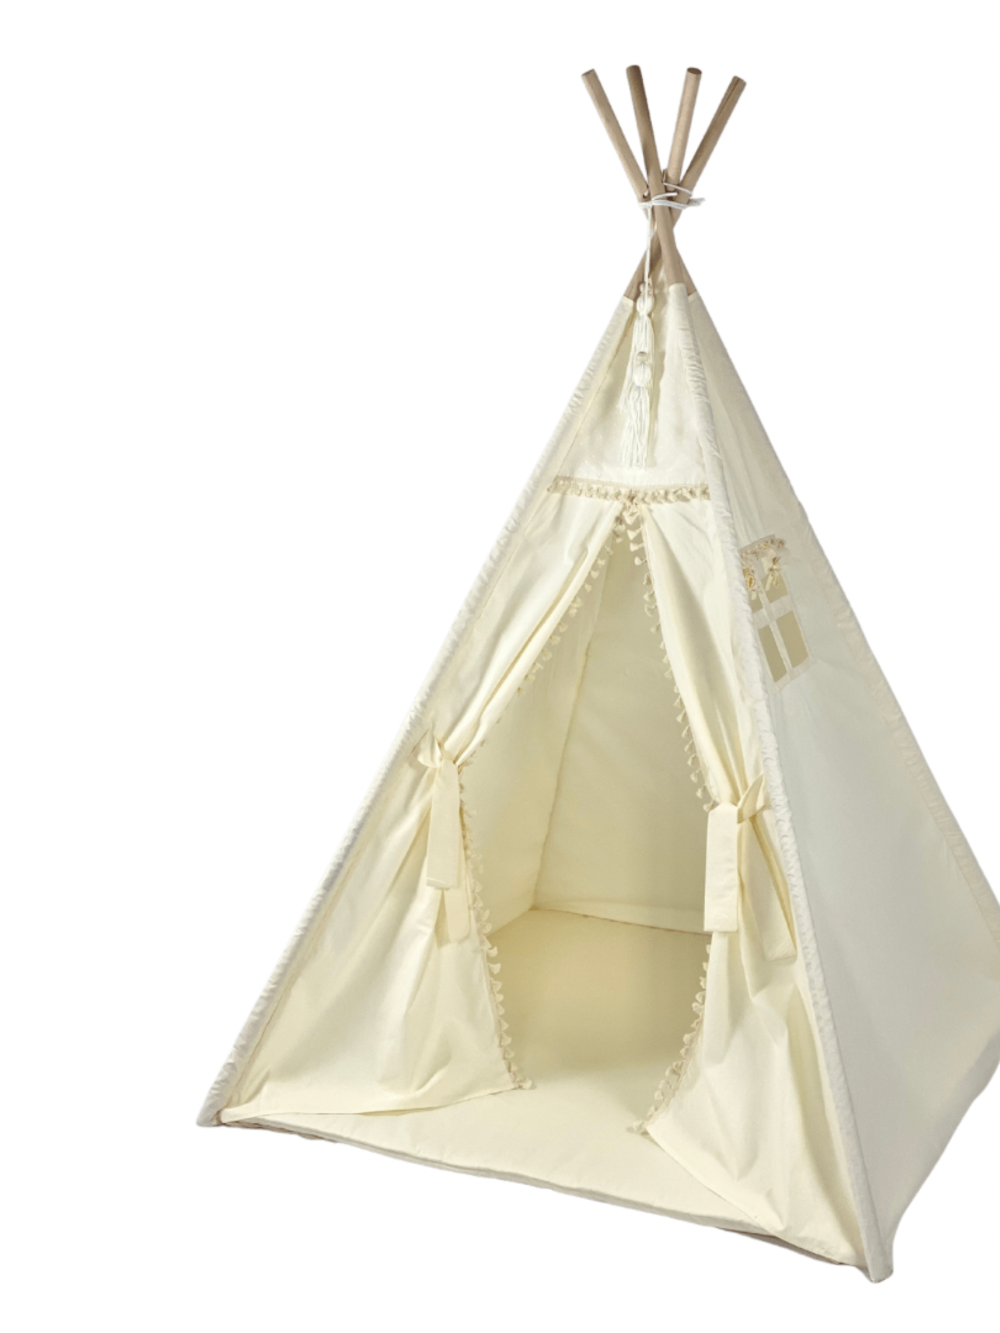 Children's Tent - Teepee Tent Caramel